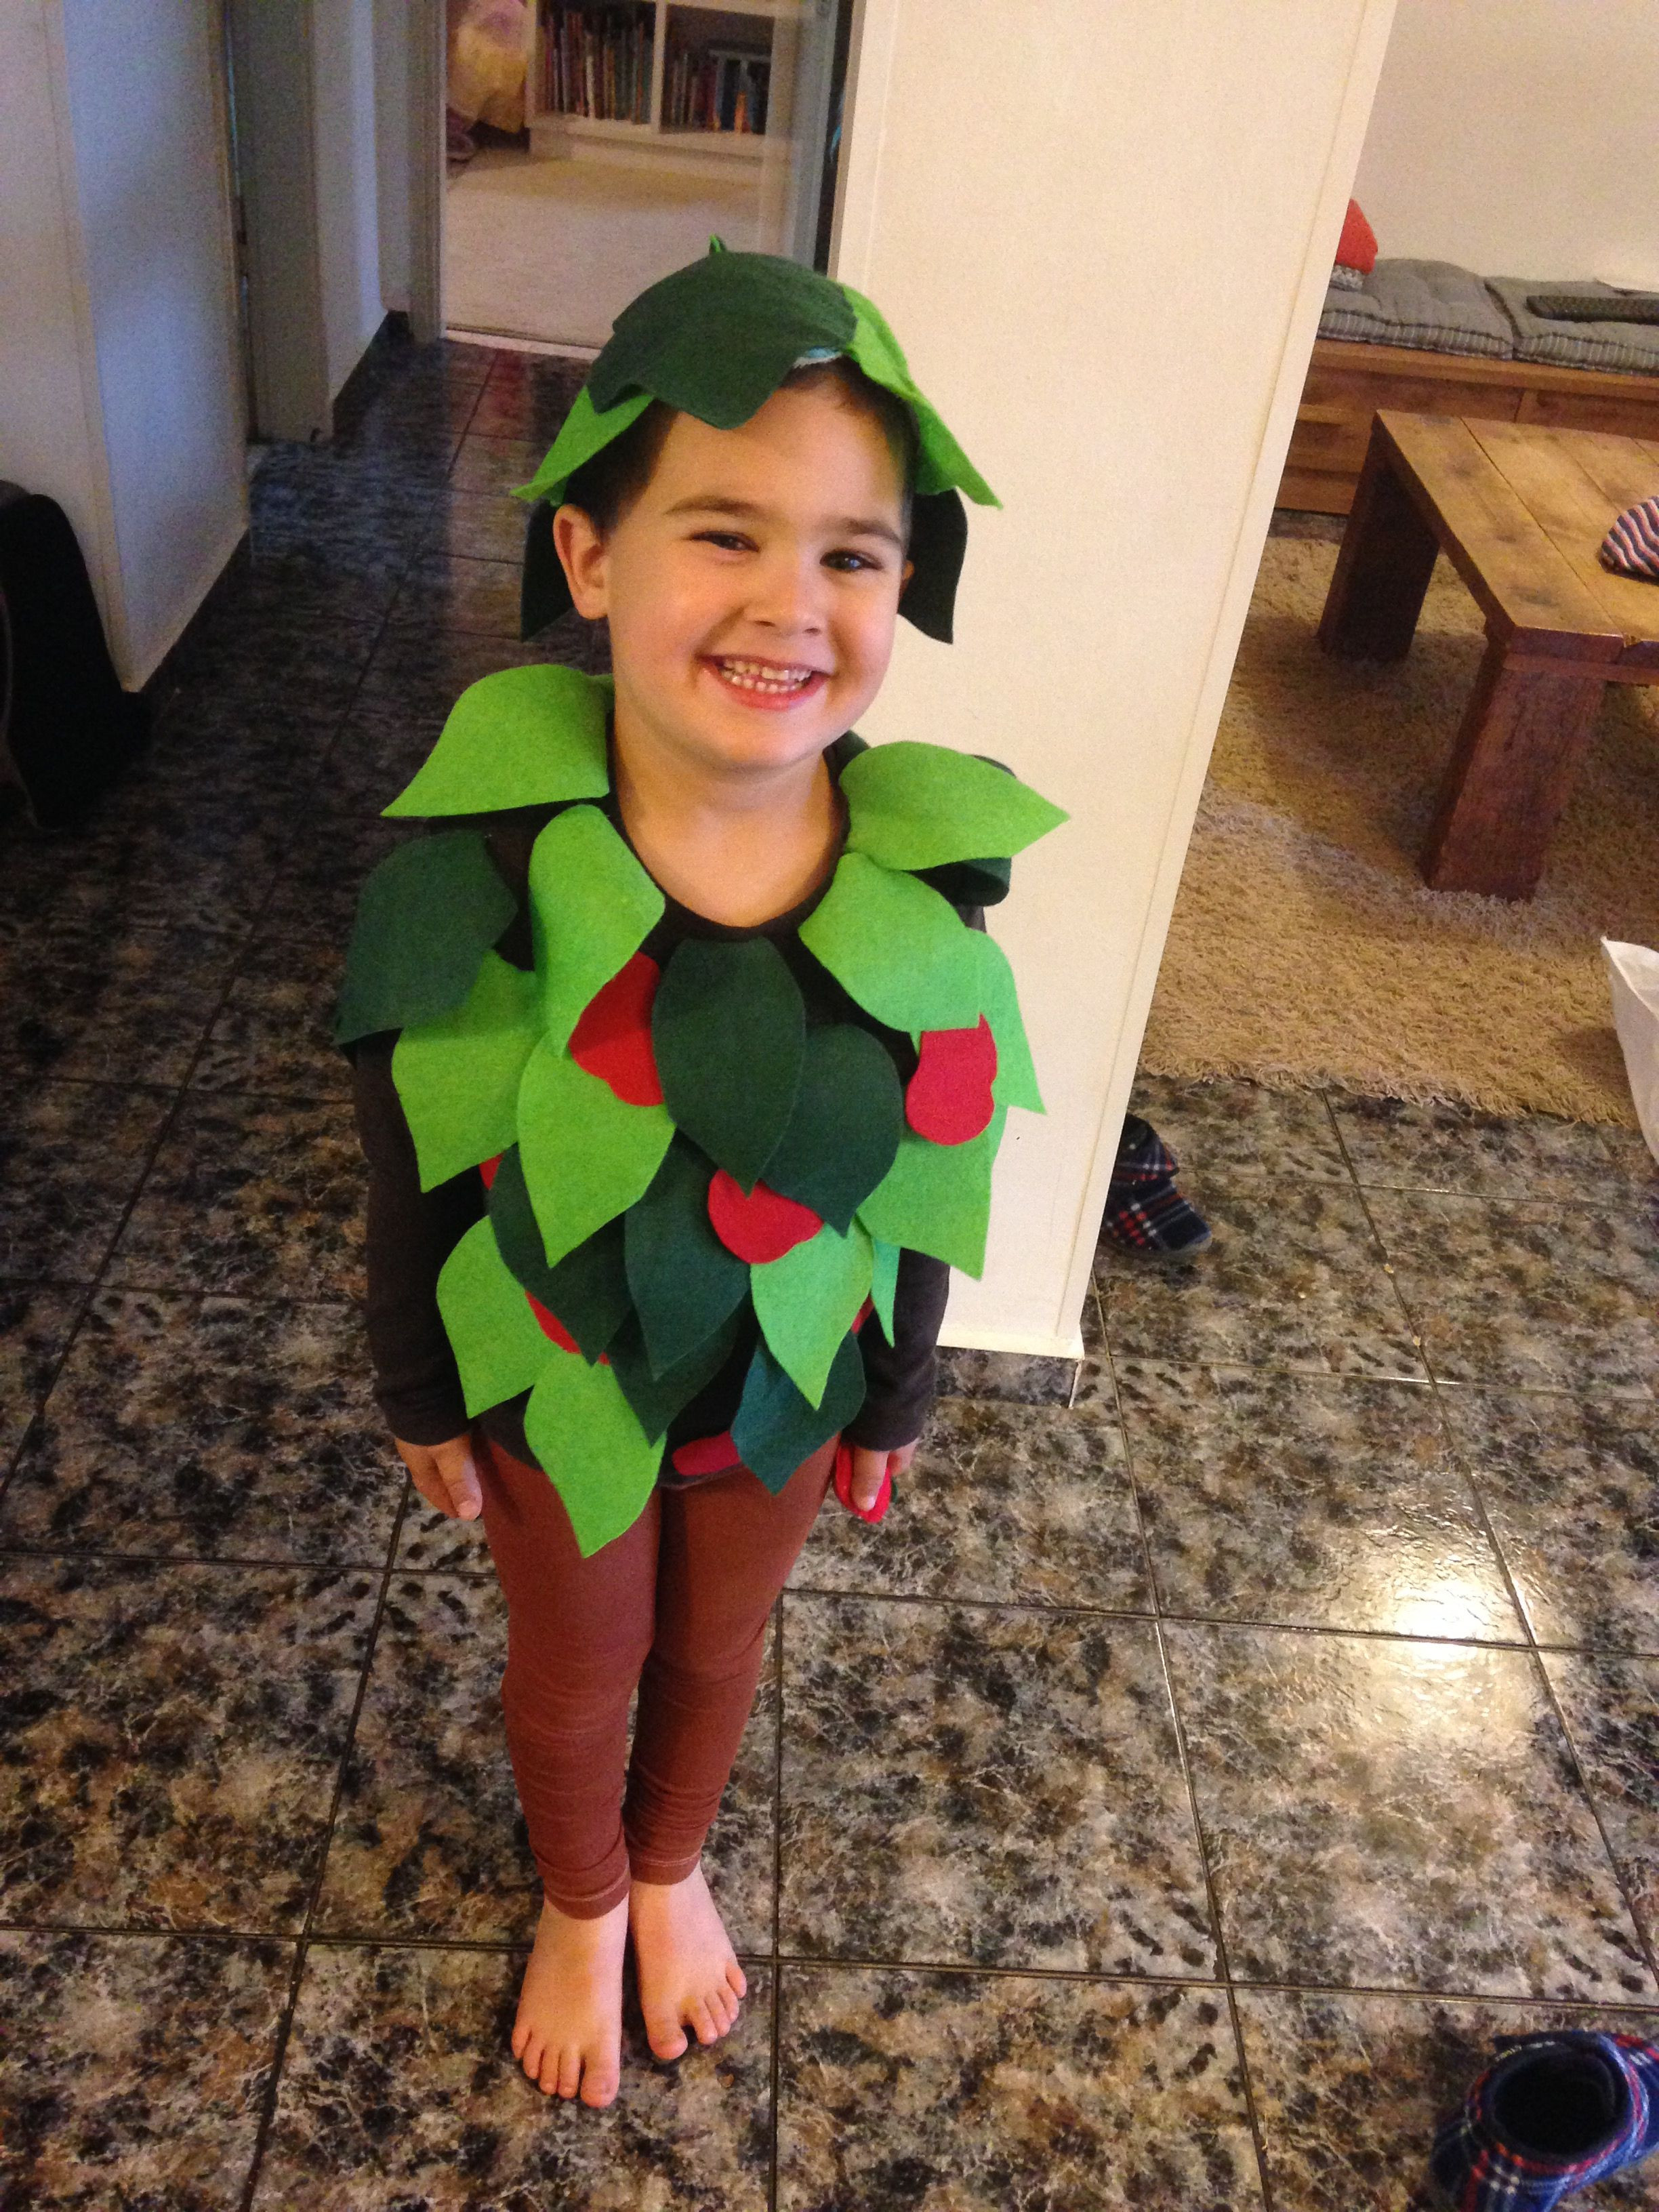 Best ideas about DIY Apple Costume
. Save or Pin Apple tree costume תחפושת עץ תפוחים diy apple tree Now.